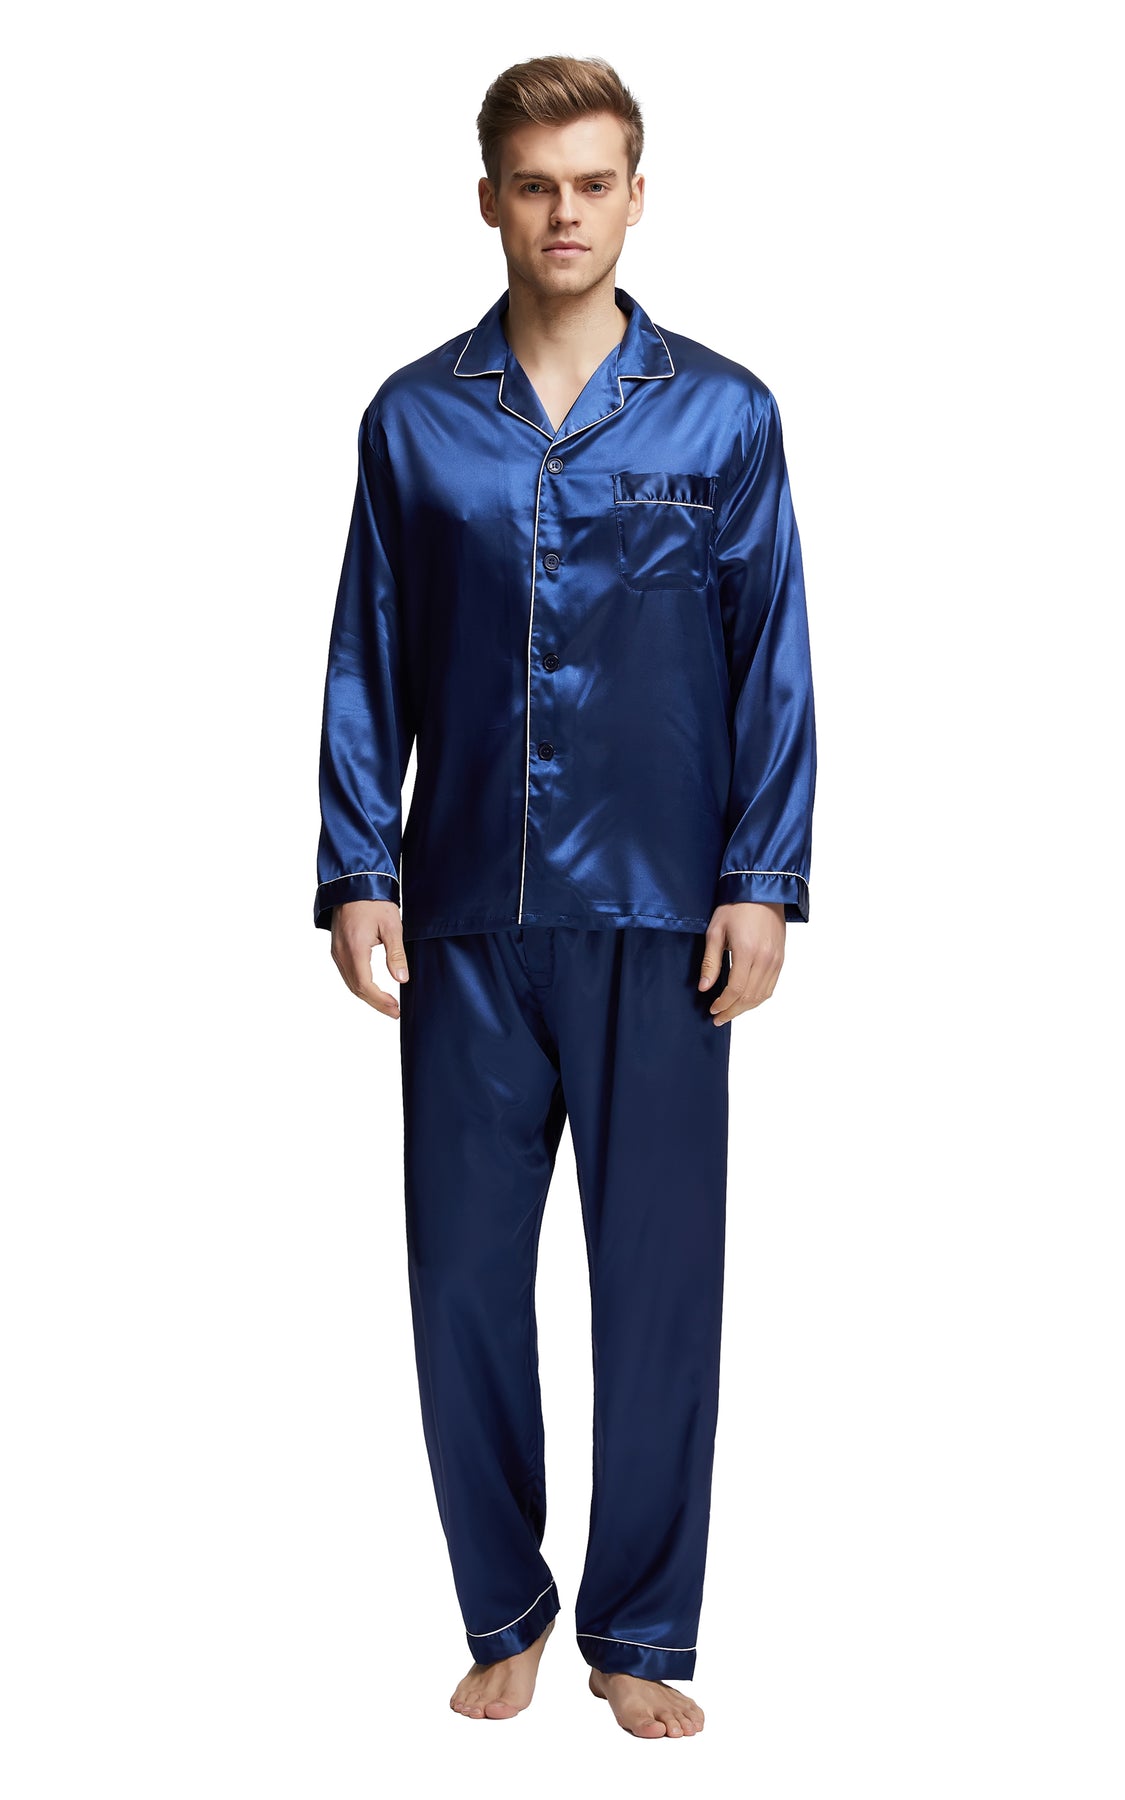 Mens Silk Satin Pajama Set Long Sleeve Navy Blue With White Piping Tony And Candice 4206